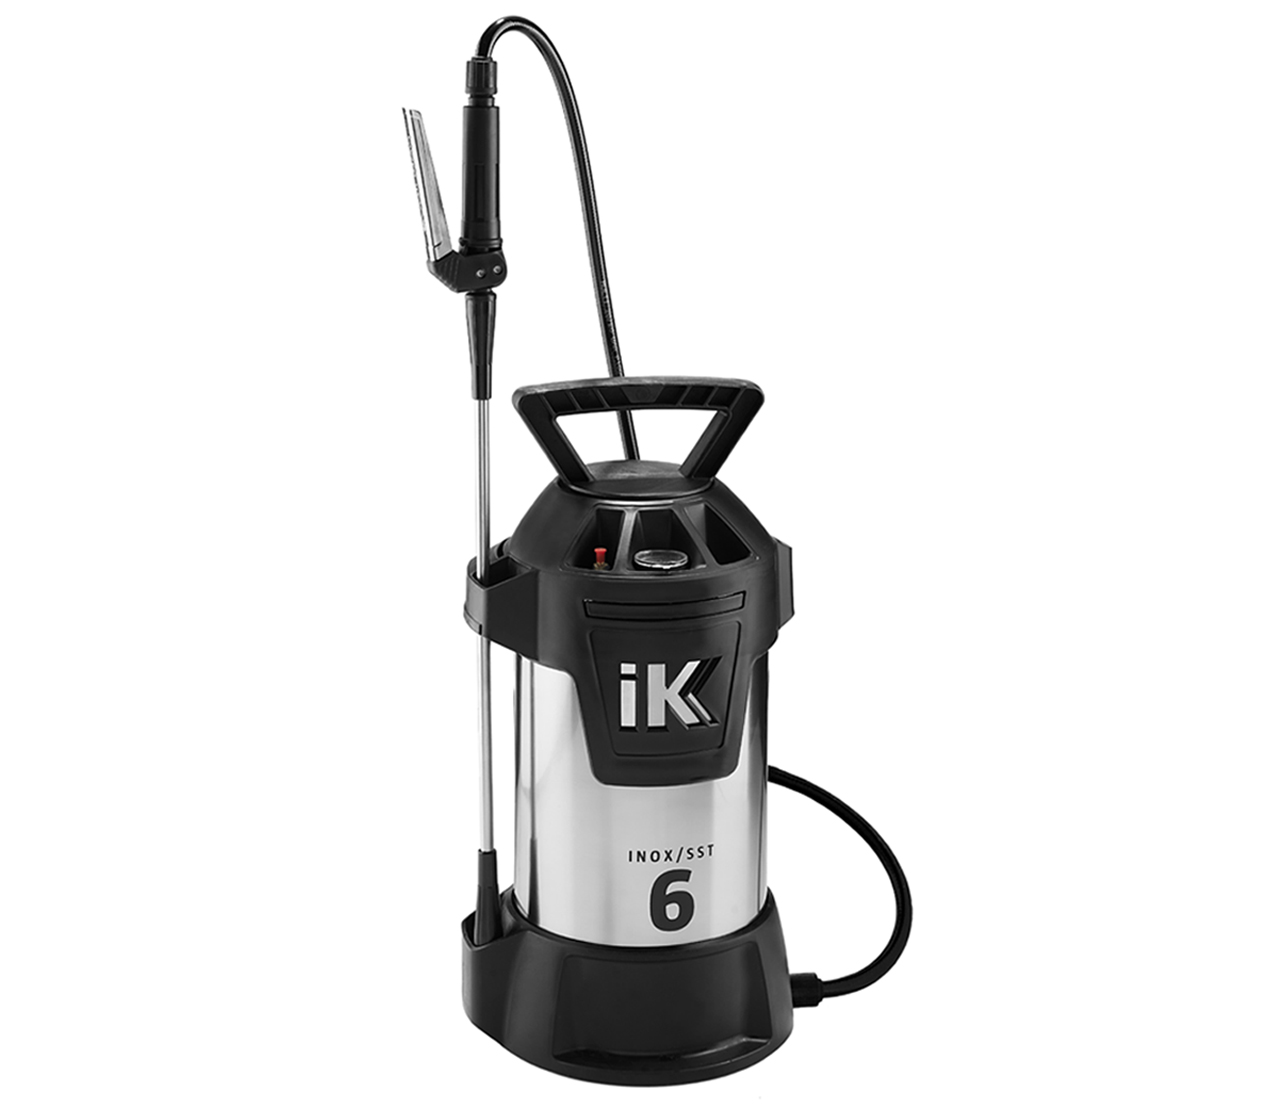 IK 2 Gallon Inox 6 Professional Metal & Stainless Steel Sprayer